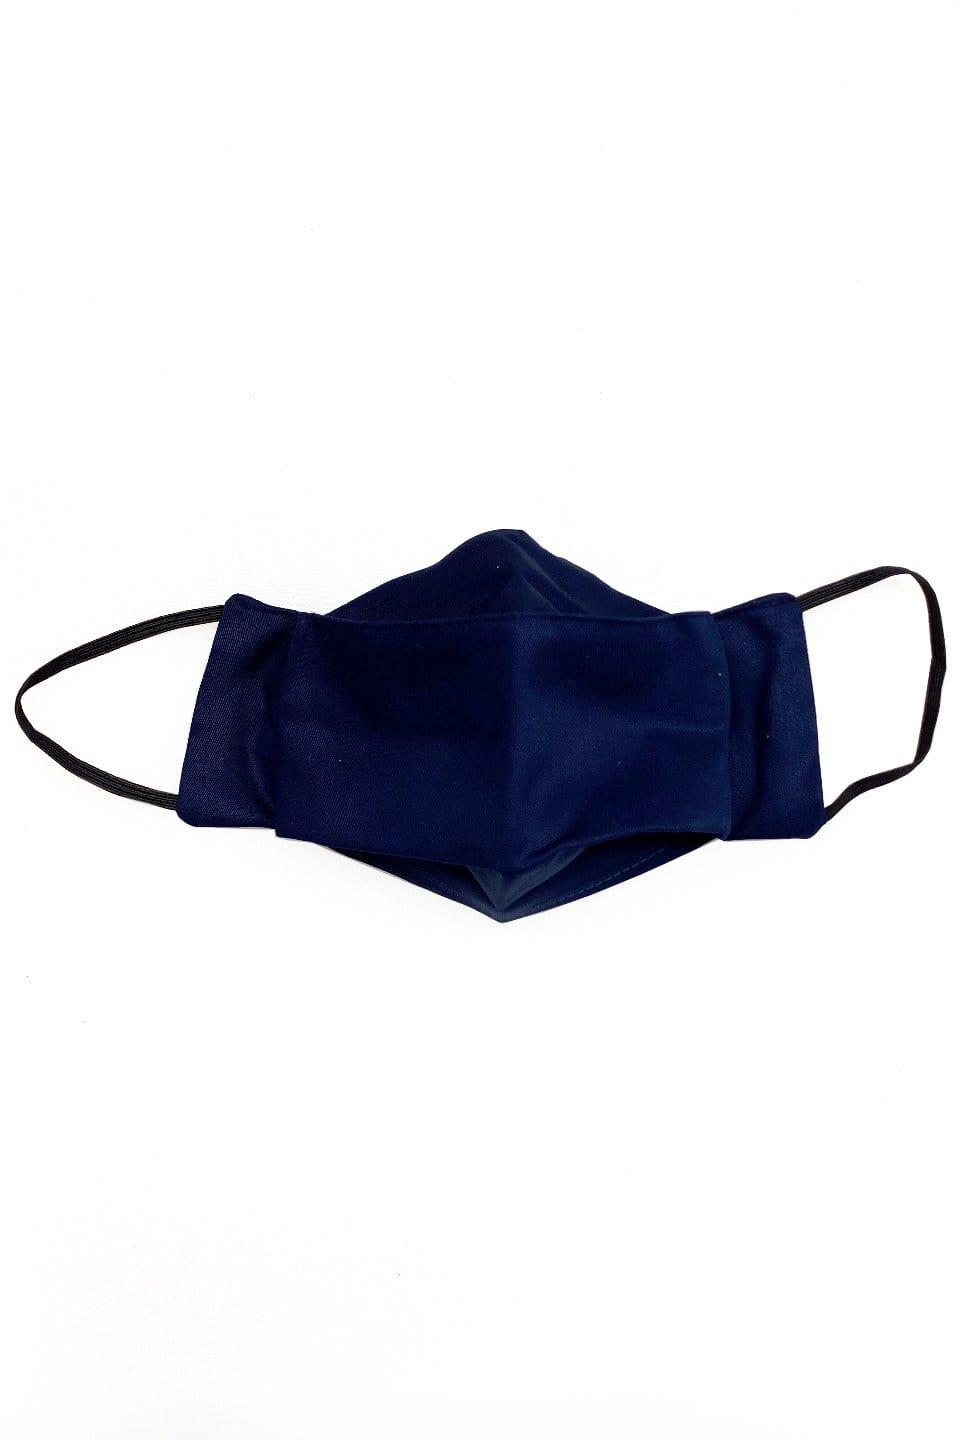 Box Pleated Face Masks New Navy Mask (Box Pleated w Filter Pocket) XS/S - Chloe Dao